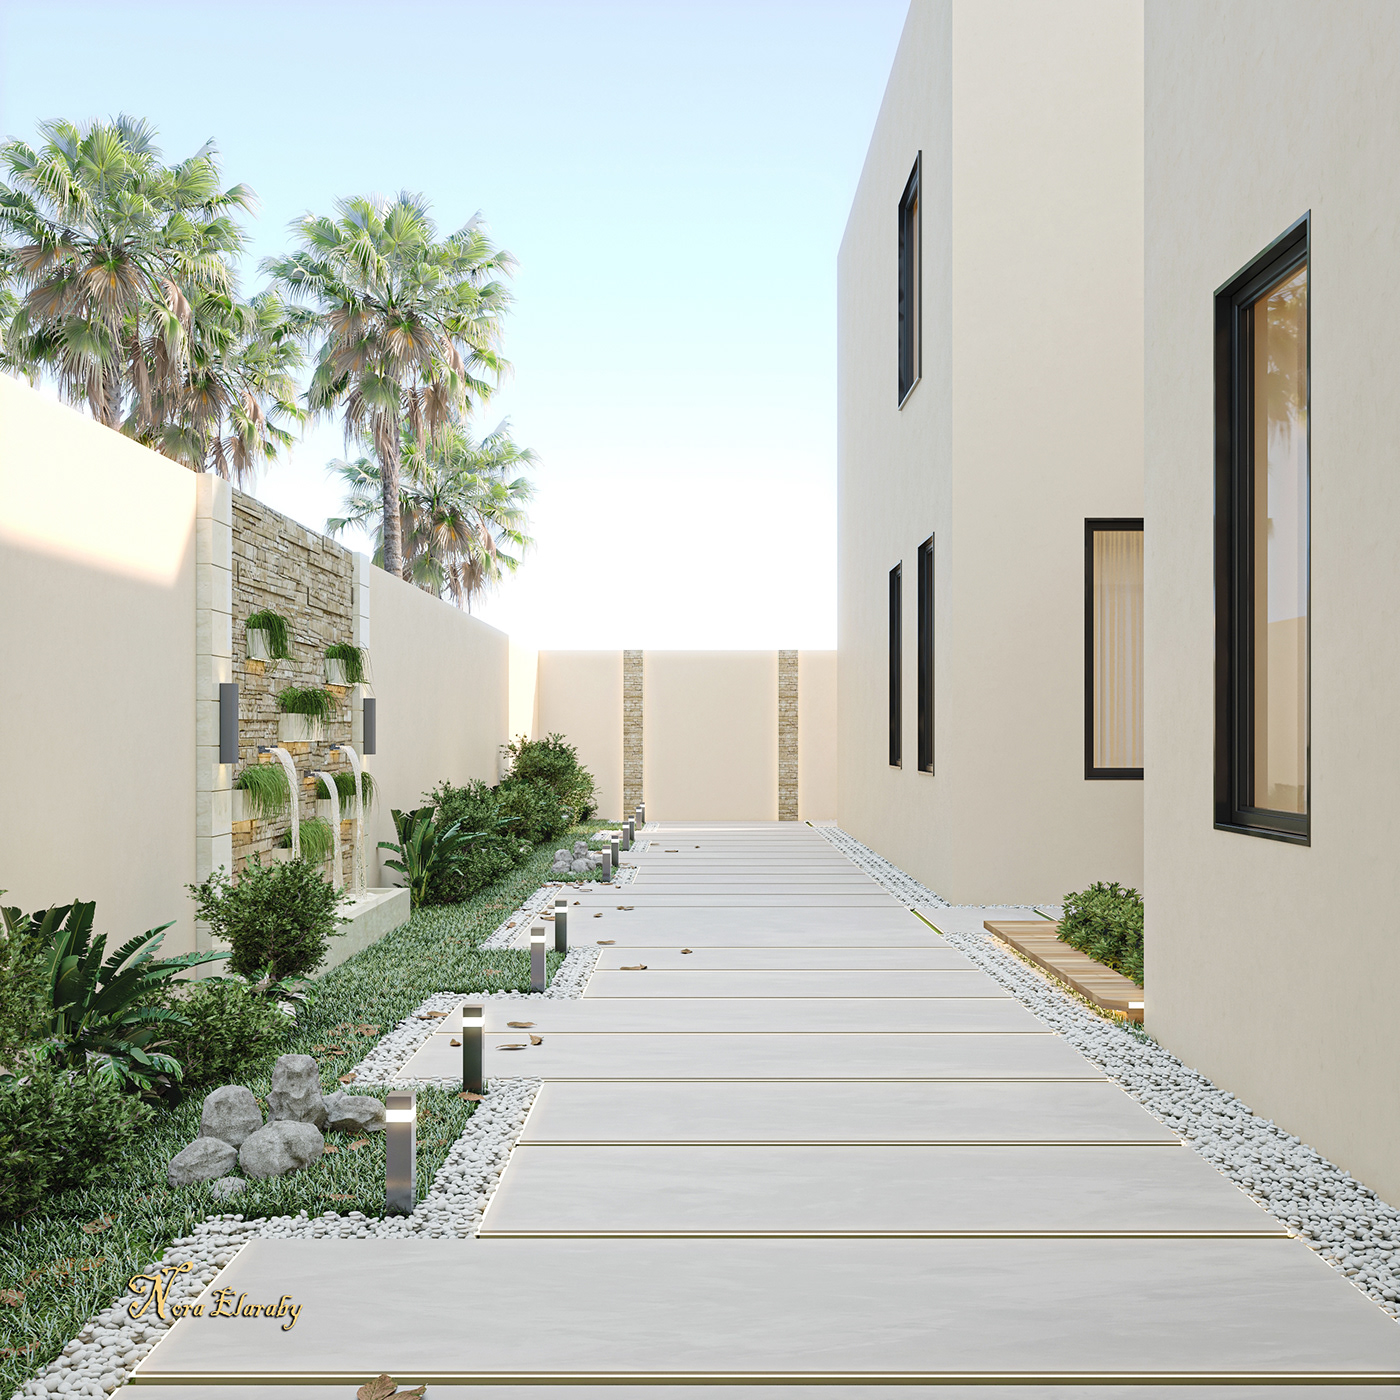 Landscape Layout Outdoor Vila architecture exterior visualization 3ds max modern design